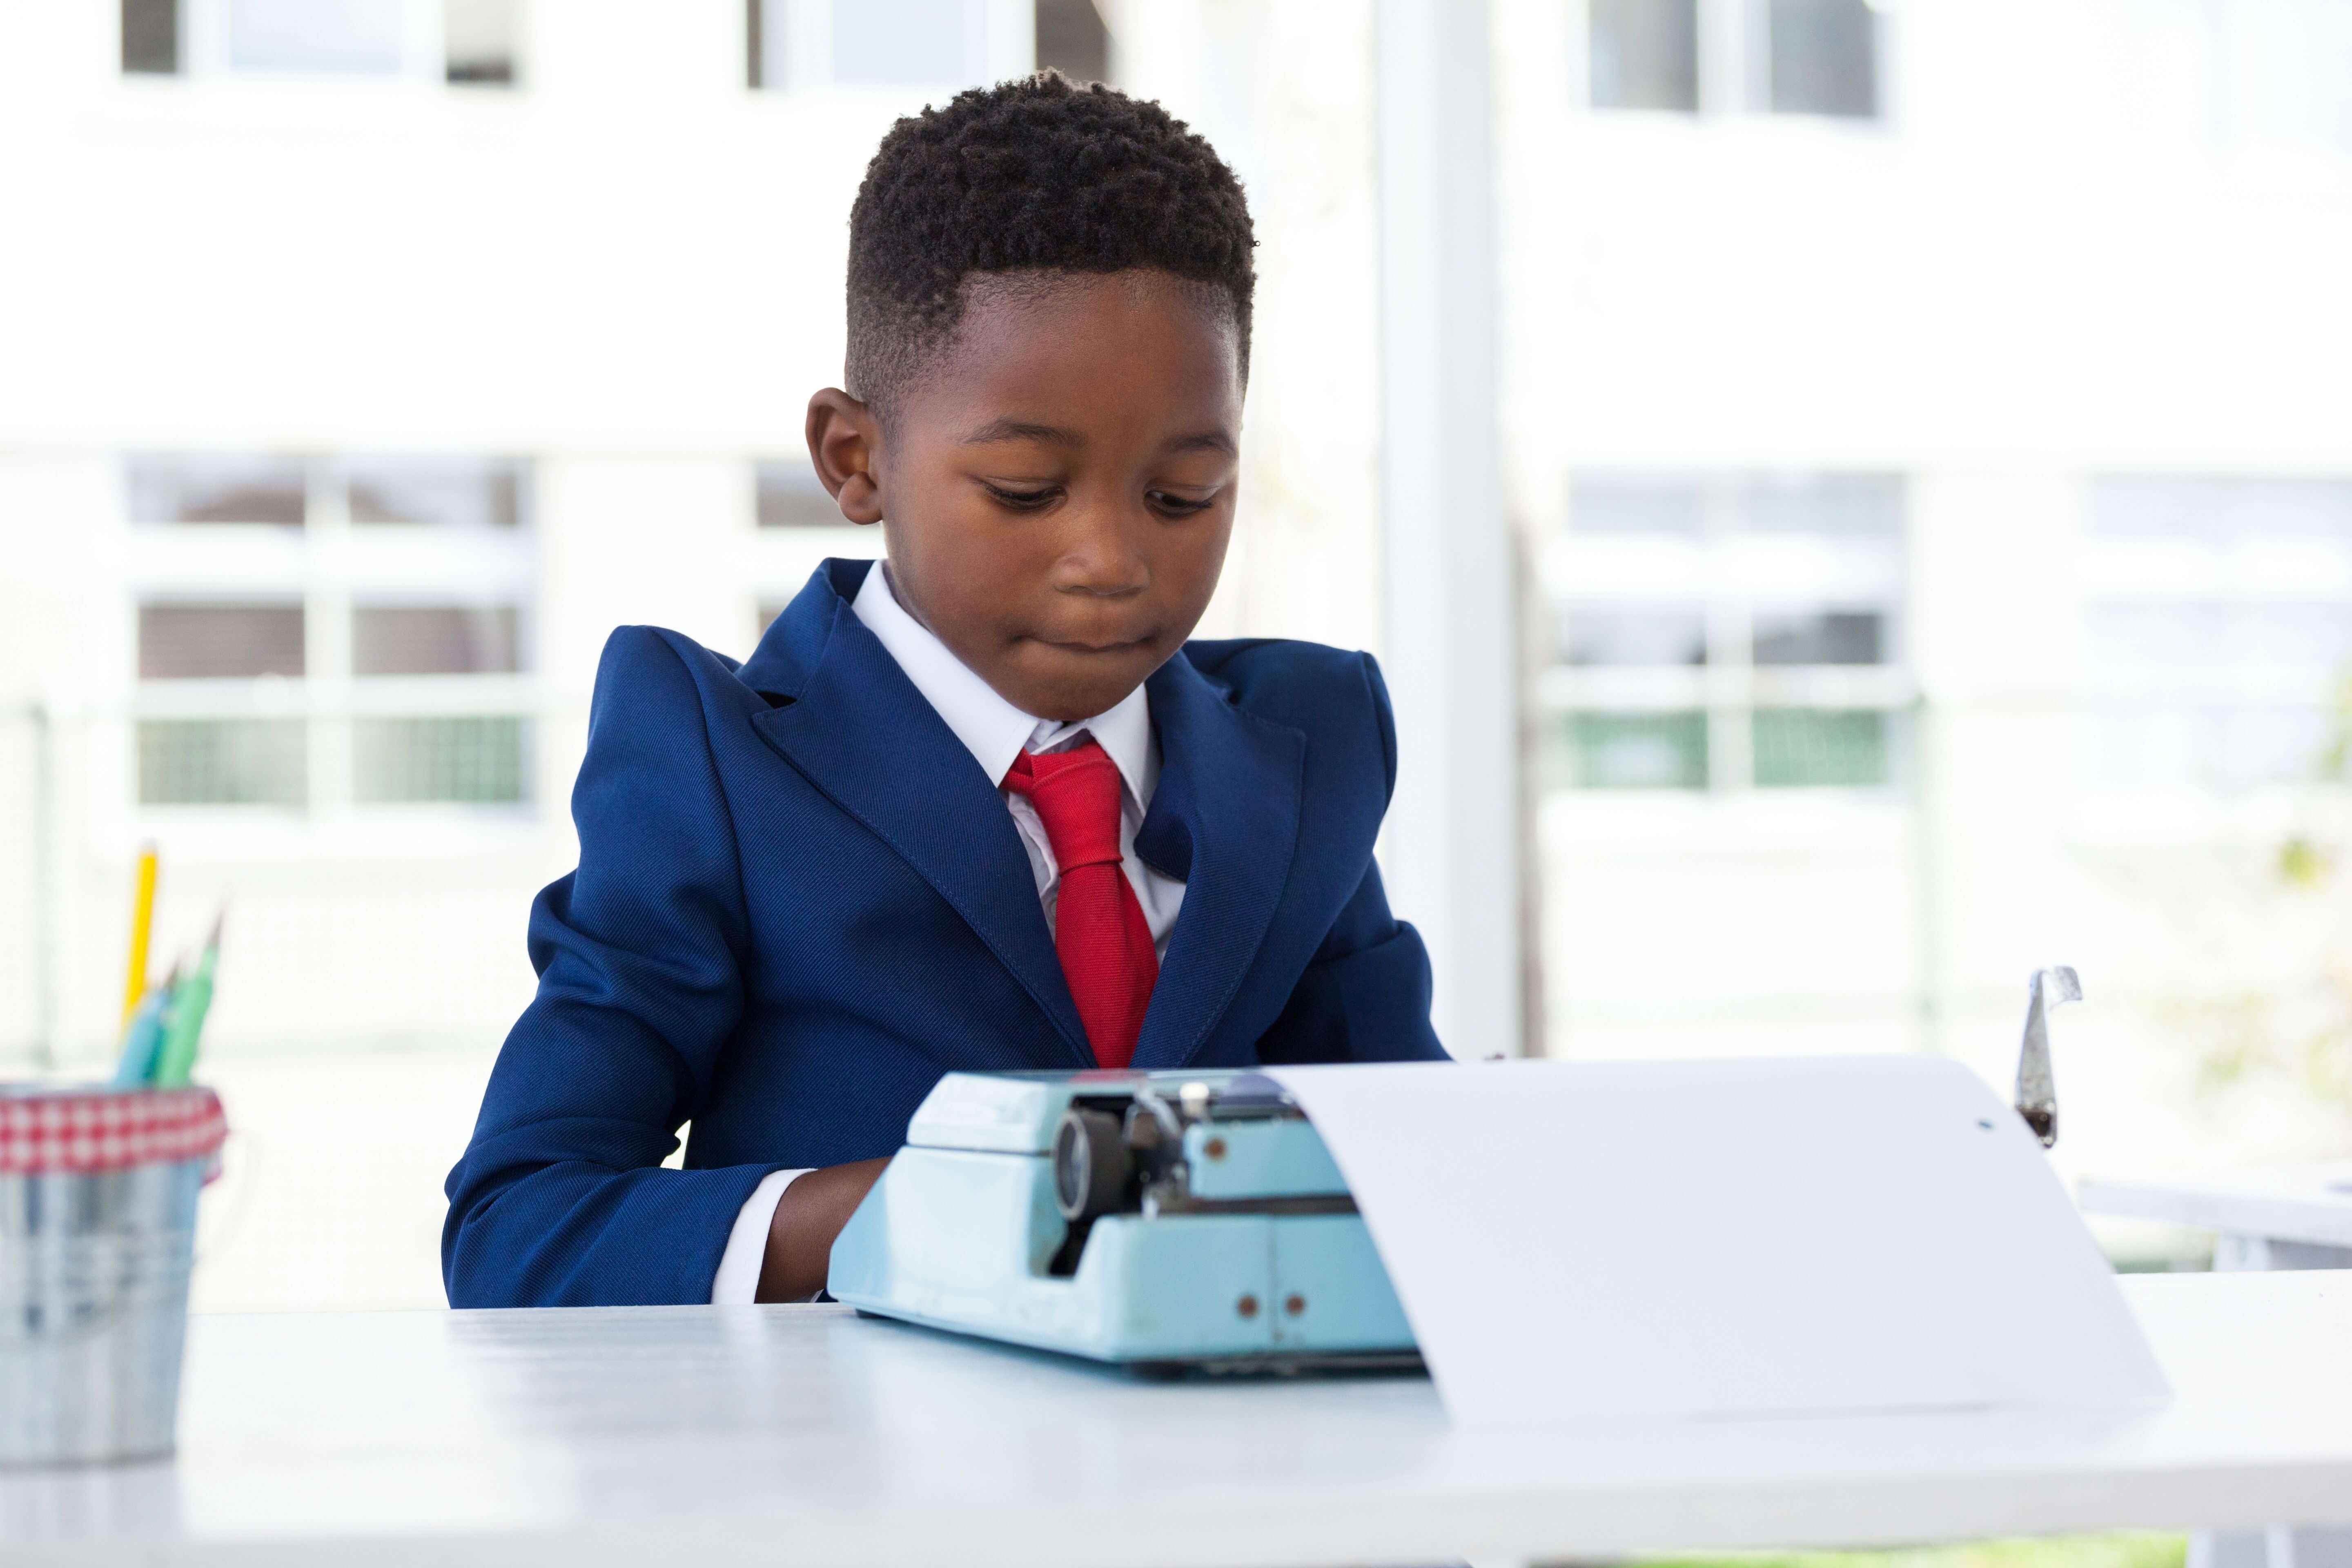 child wearing a suit using a typewriter